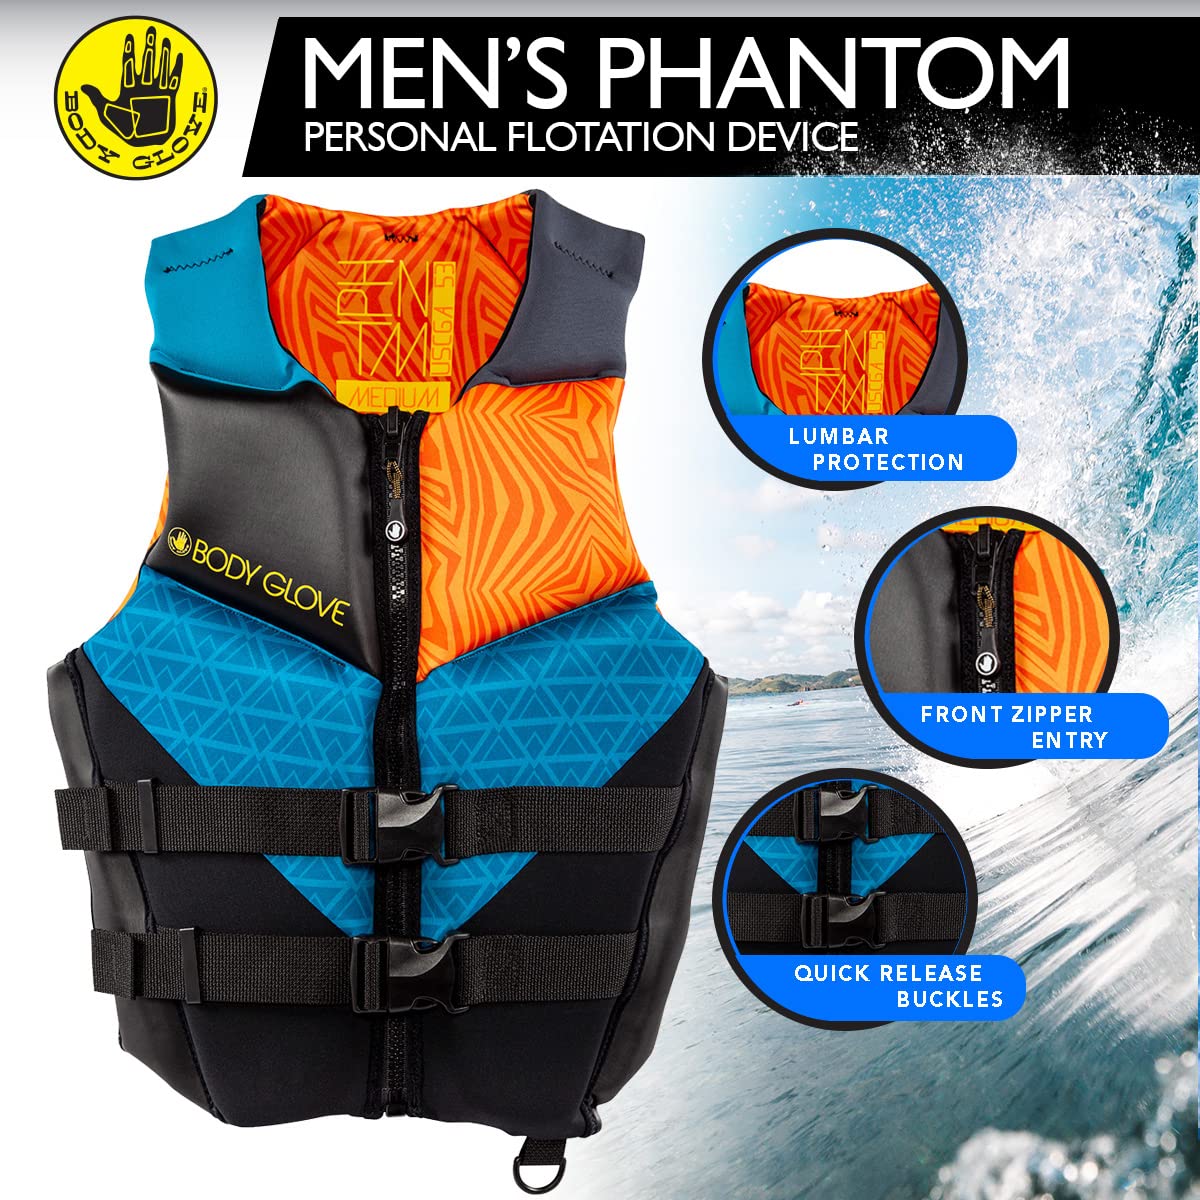 Body Glove- Phantom Men's Evoprene PFD-Adult Life Jacket - Coast Guard Approved, High Mobility PFD, Lightweight Buoyancy Foam, Universal and Oversize